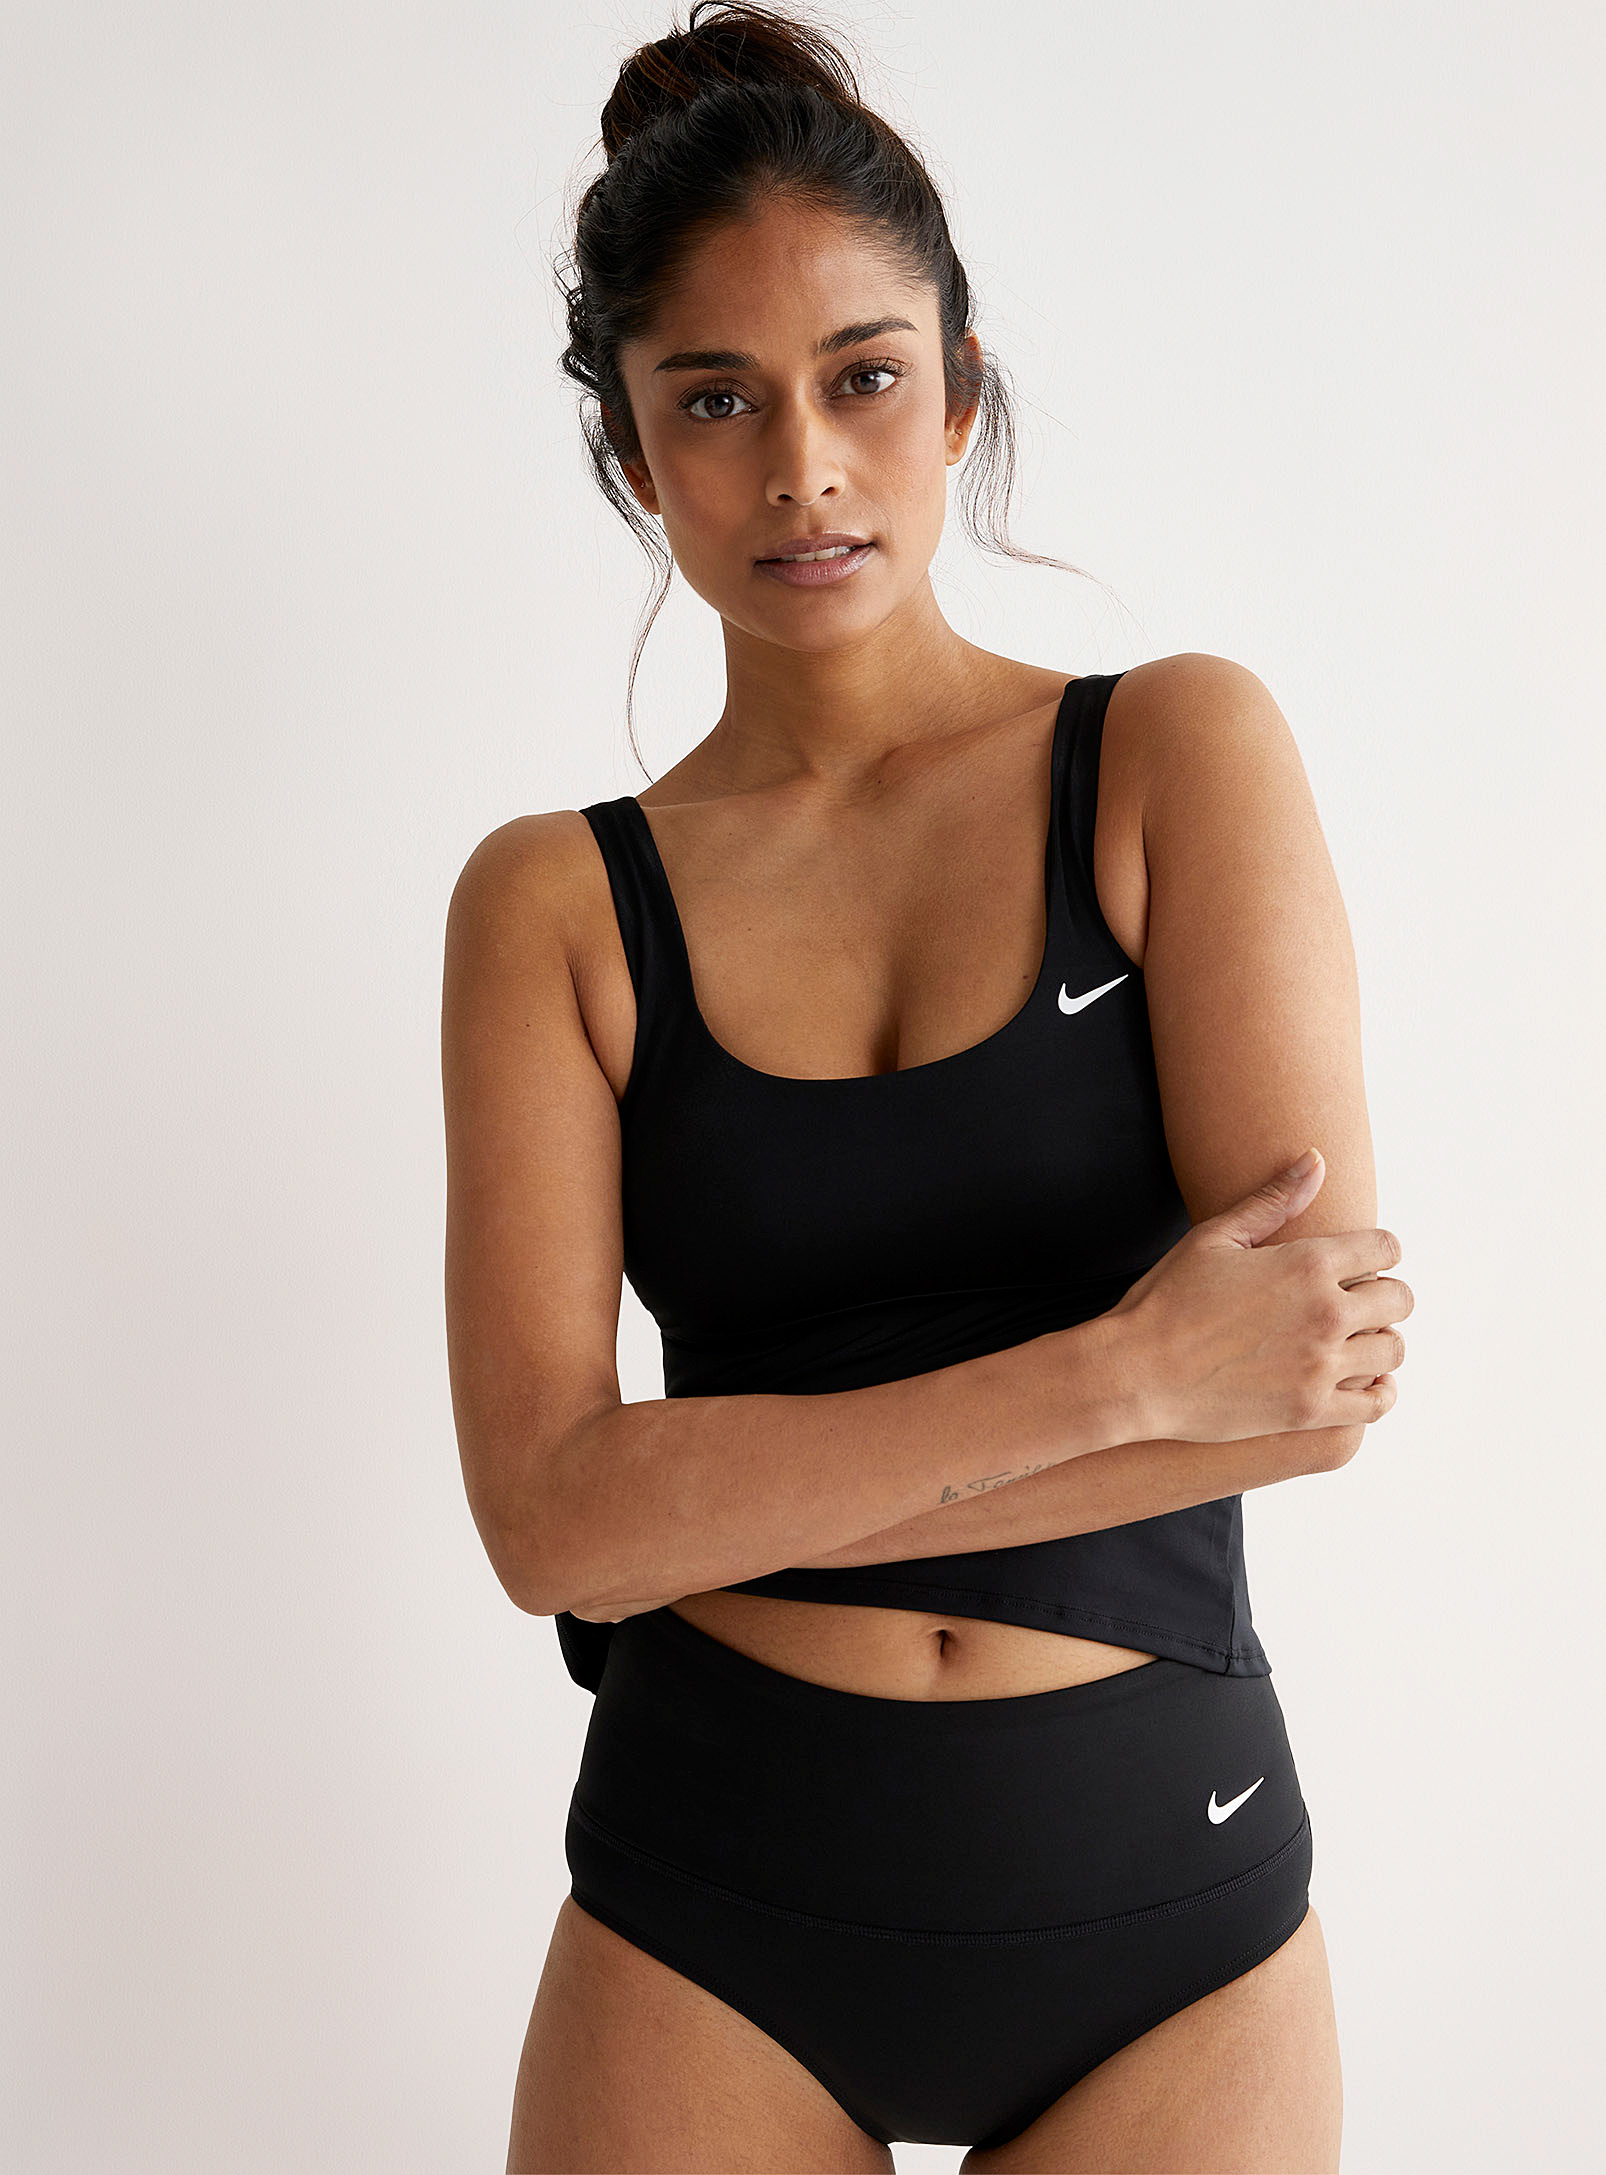 Nike - Women's Swoosh logo high-rise bottom